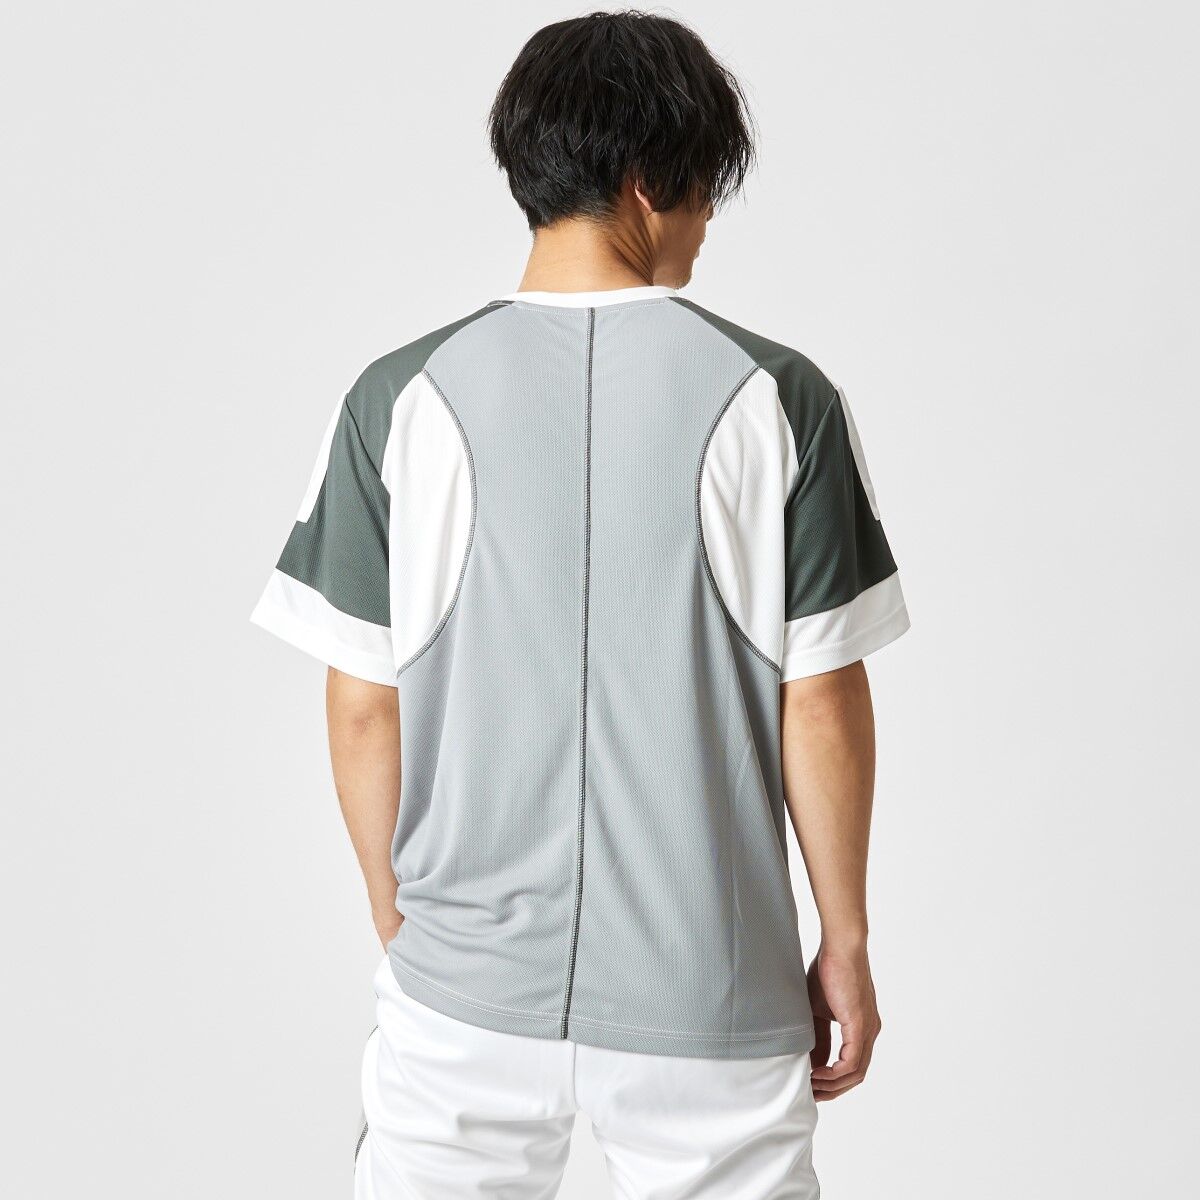 Kamen Rider Revice Fenix Mesh T-shirt